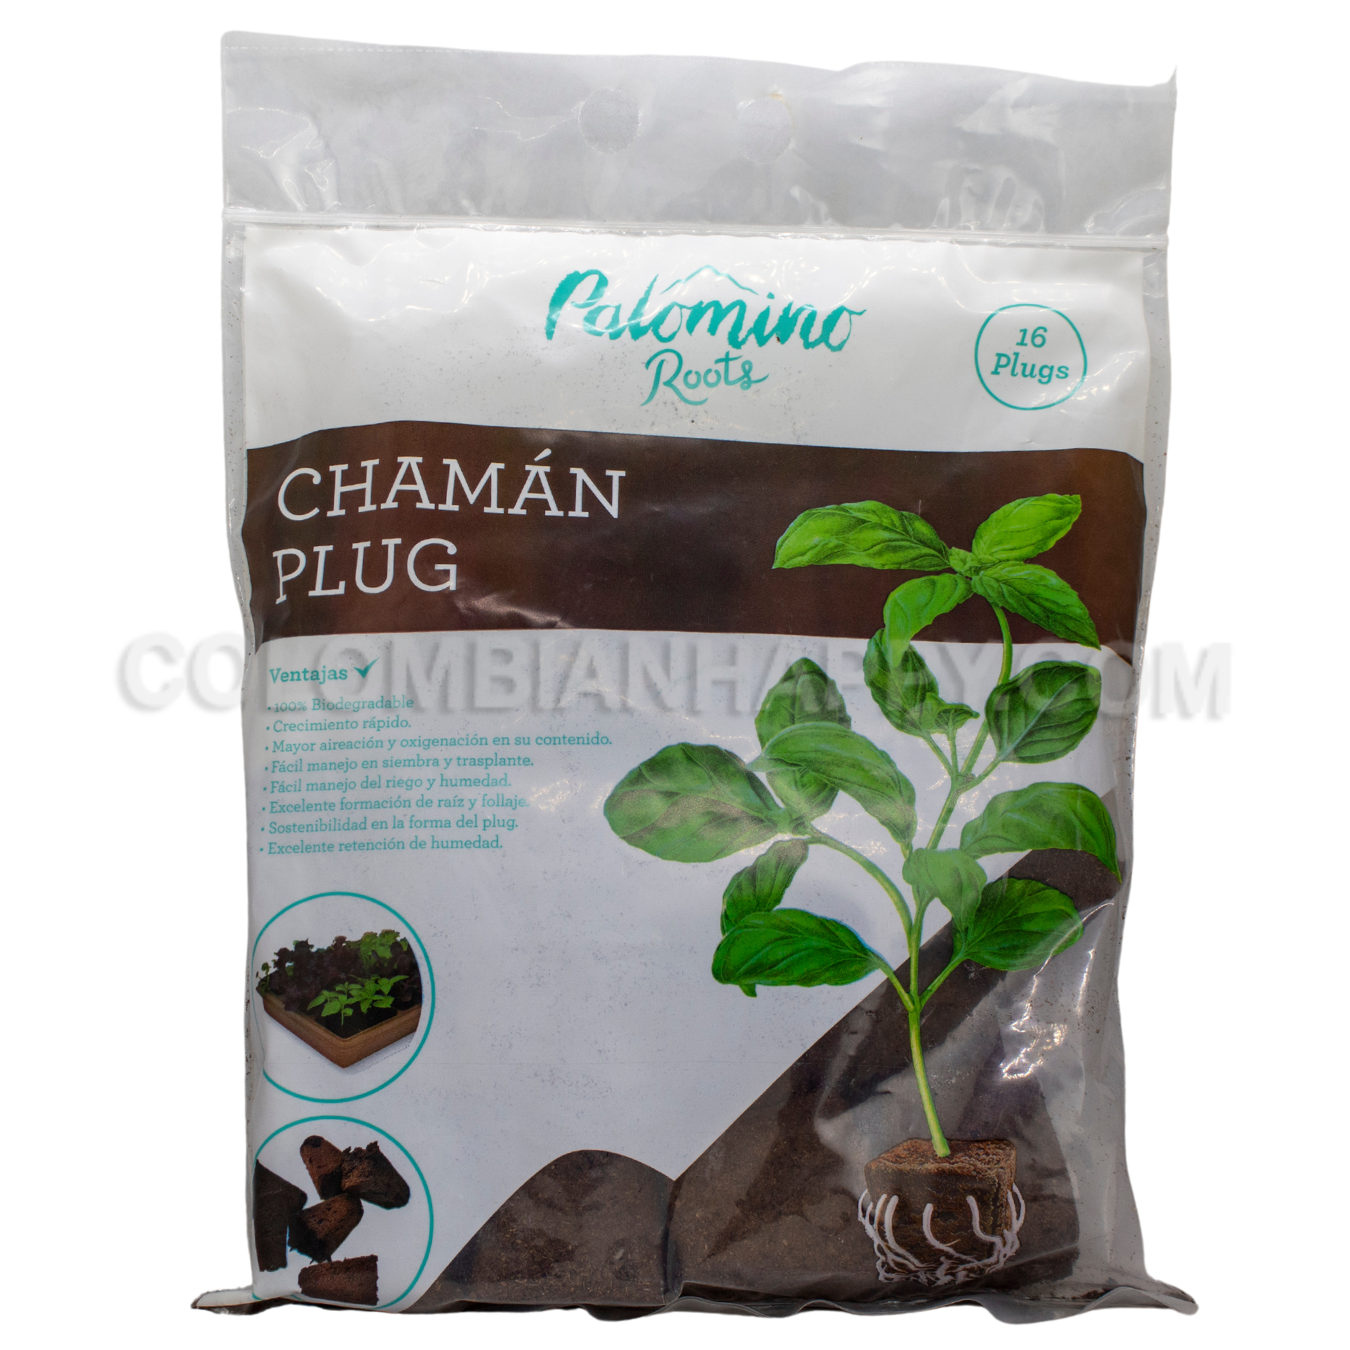 Chamán Plug pack X 16 - Palomino Roots